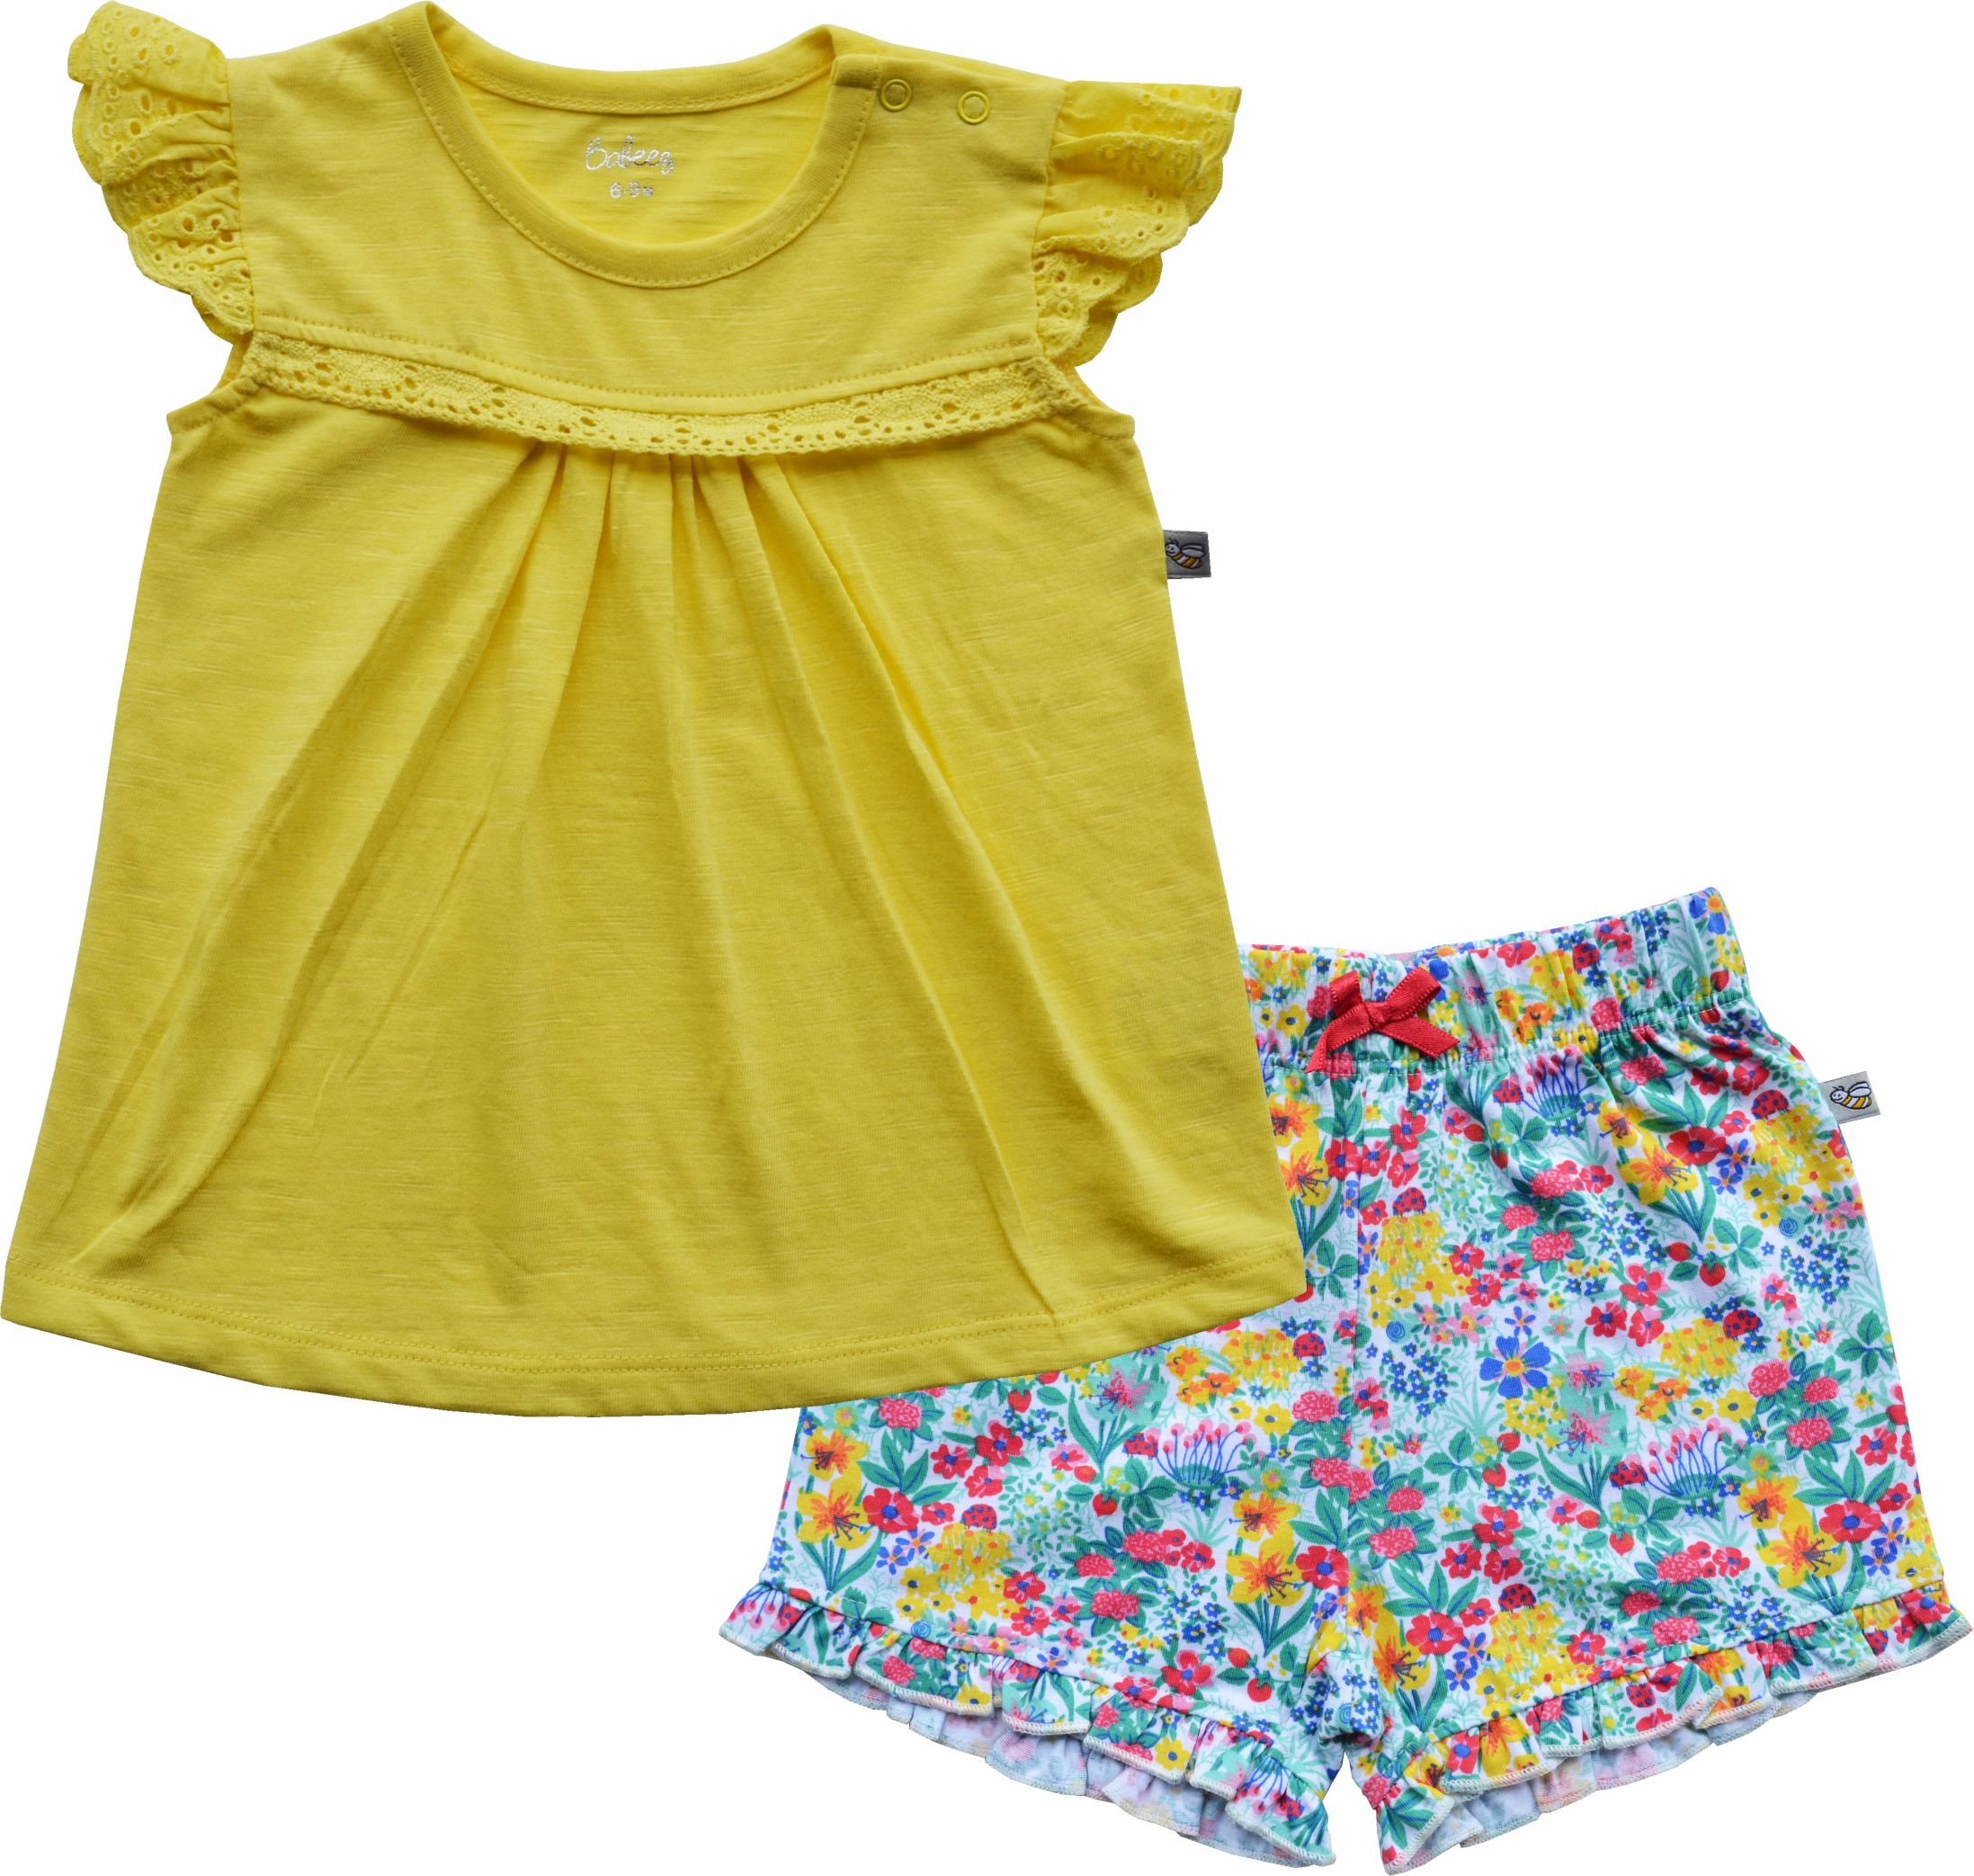 Yellow Top+Flower AOP Shorts set